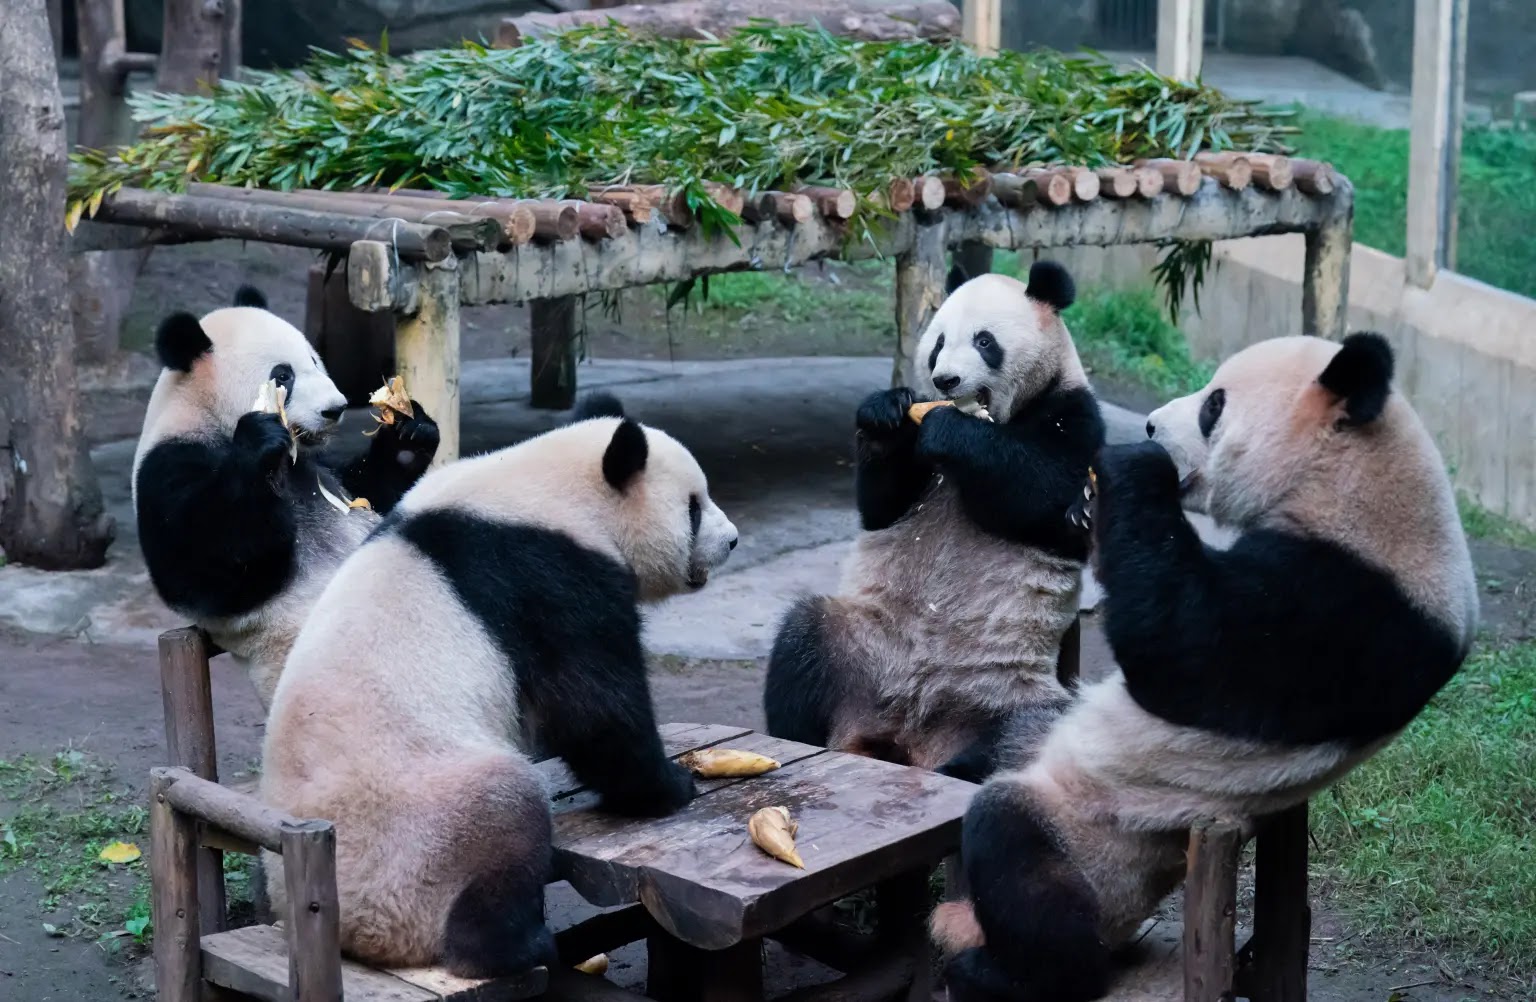 4 Pandas sit and eat like humans